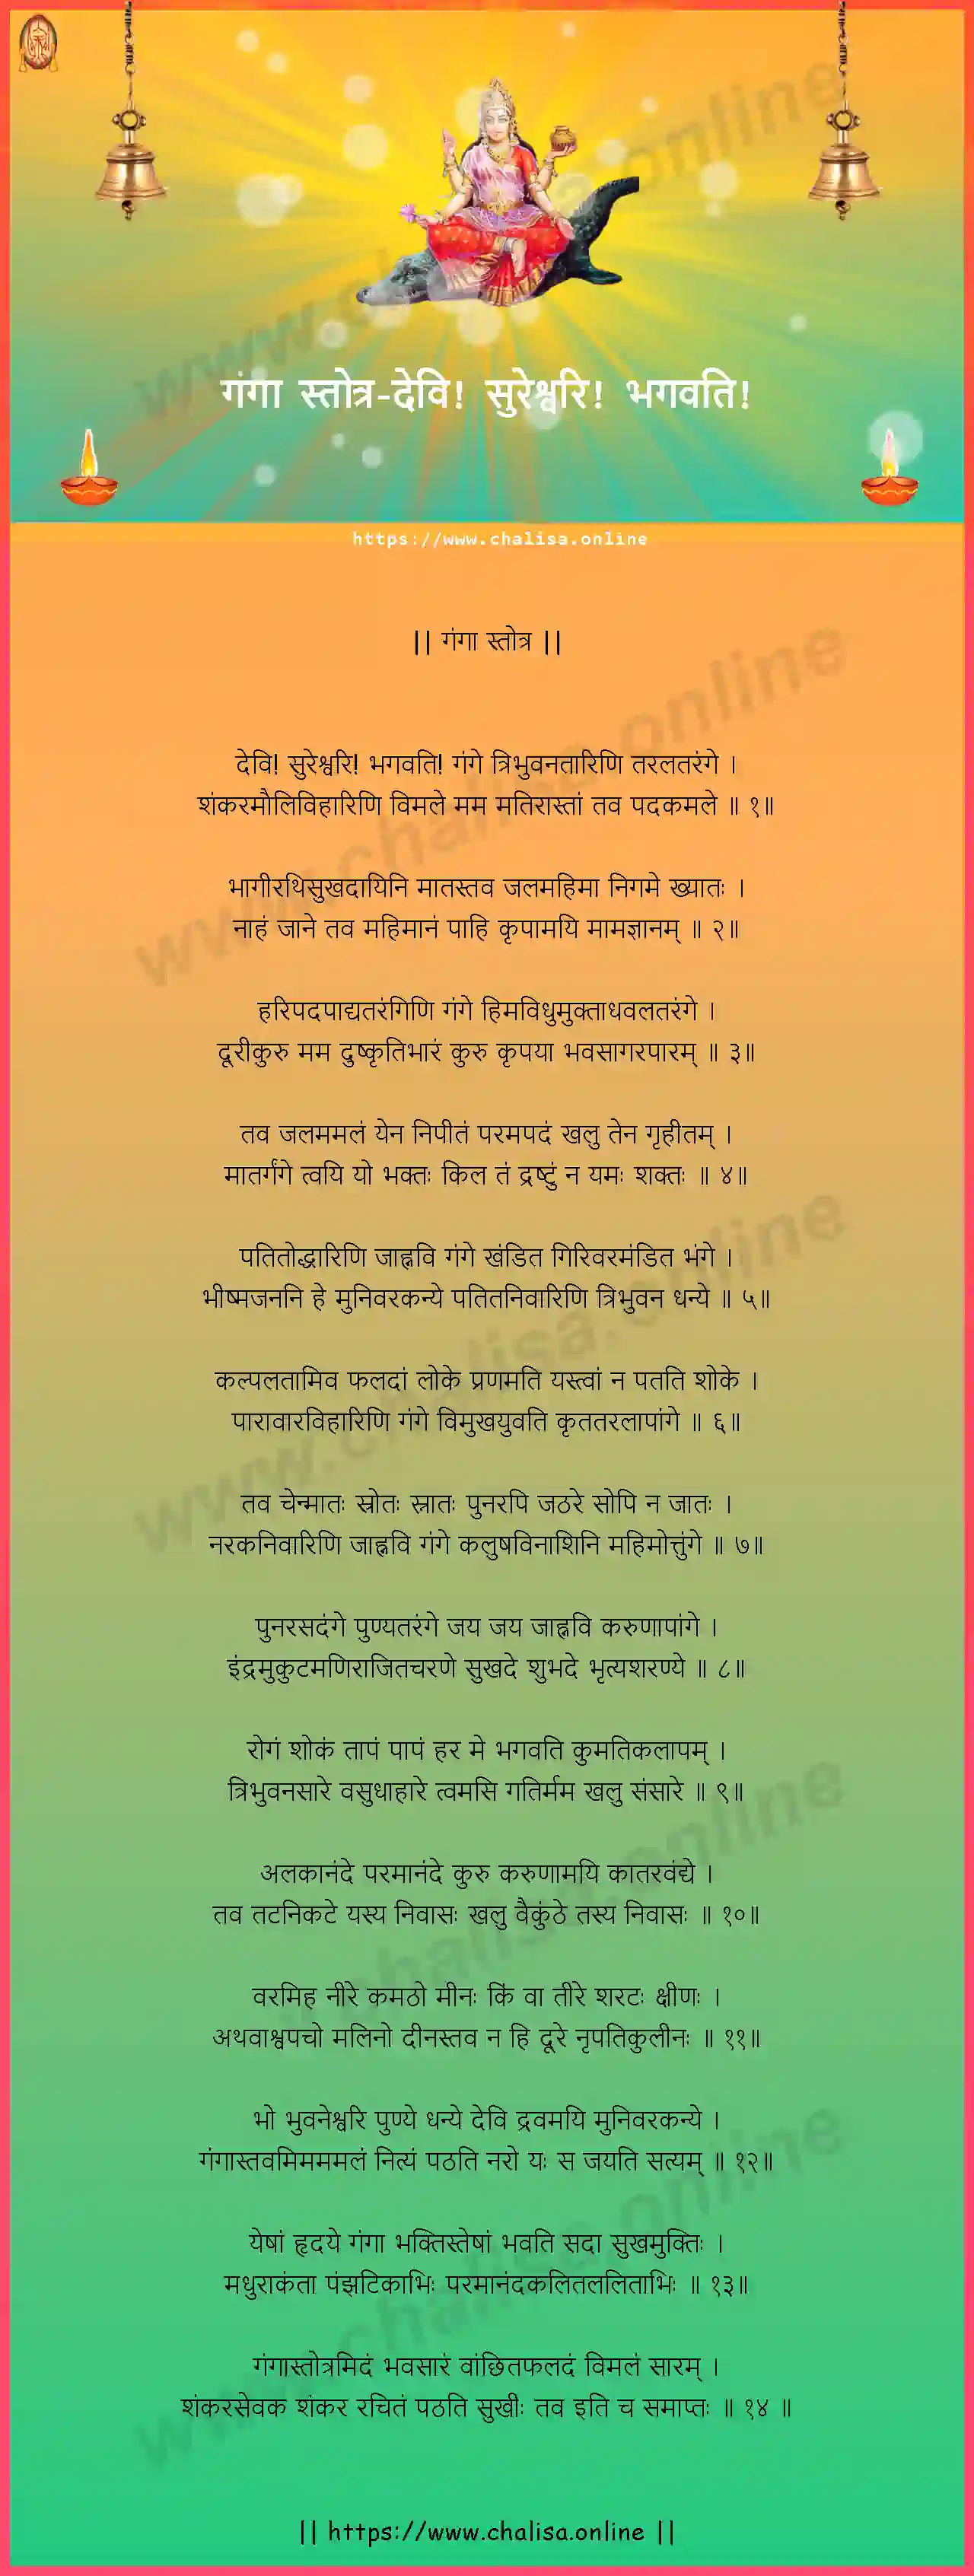 devi-sureshwari-bhagwati-ganga-maa-stotra-marathi-lyrics-download